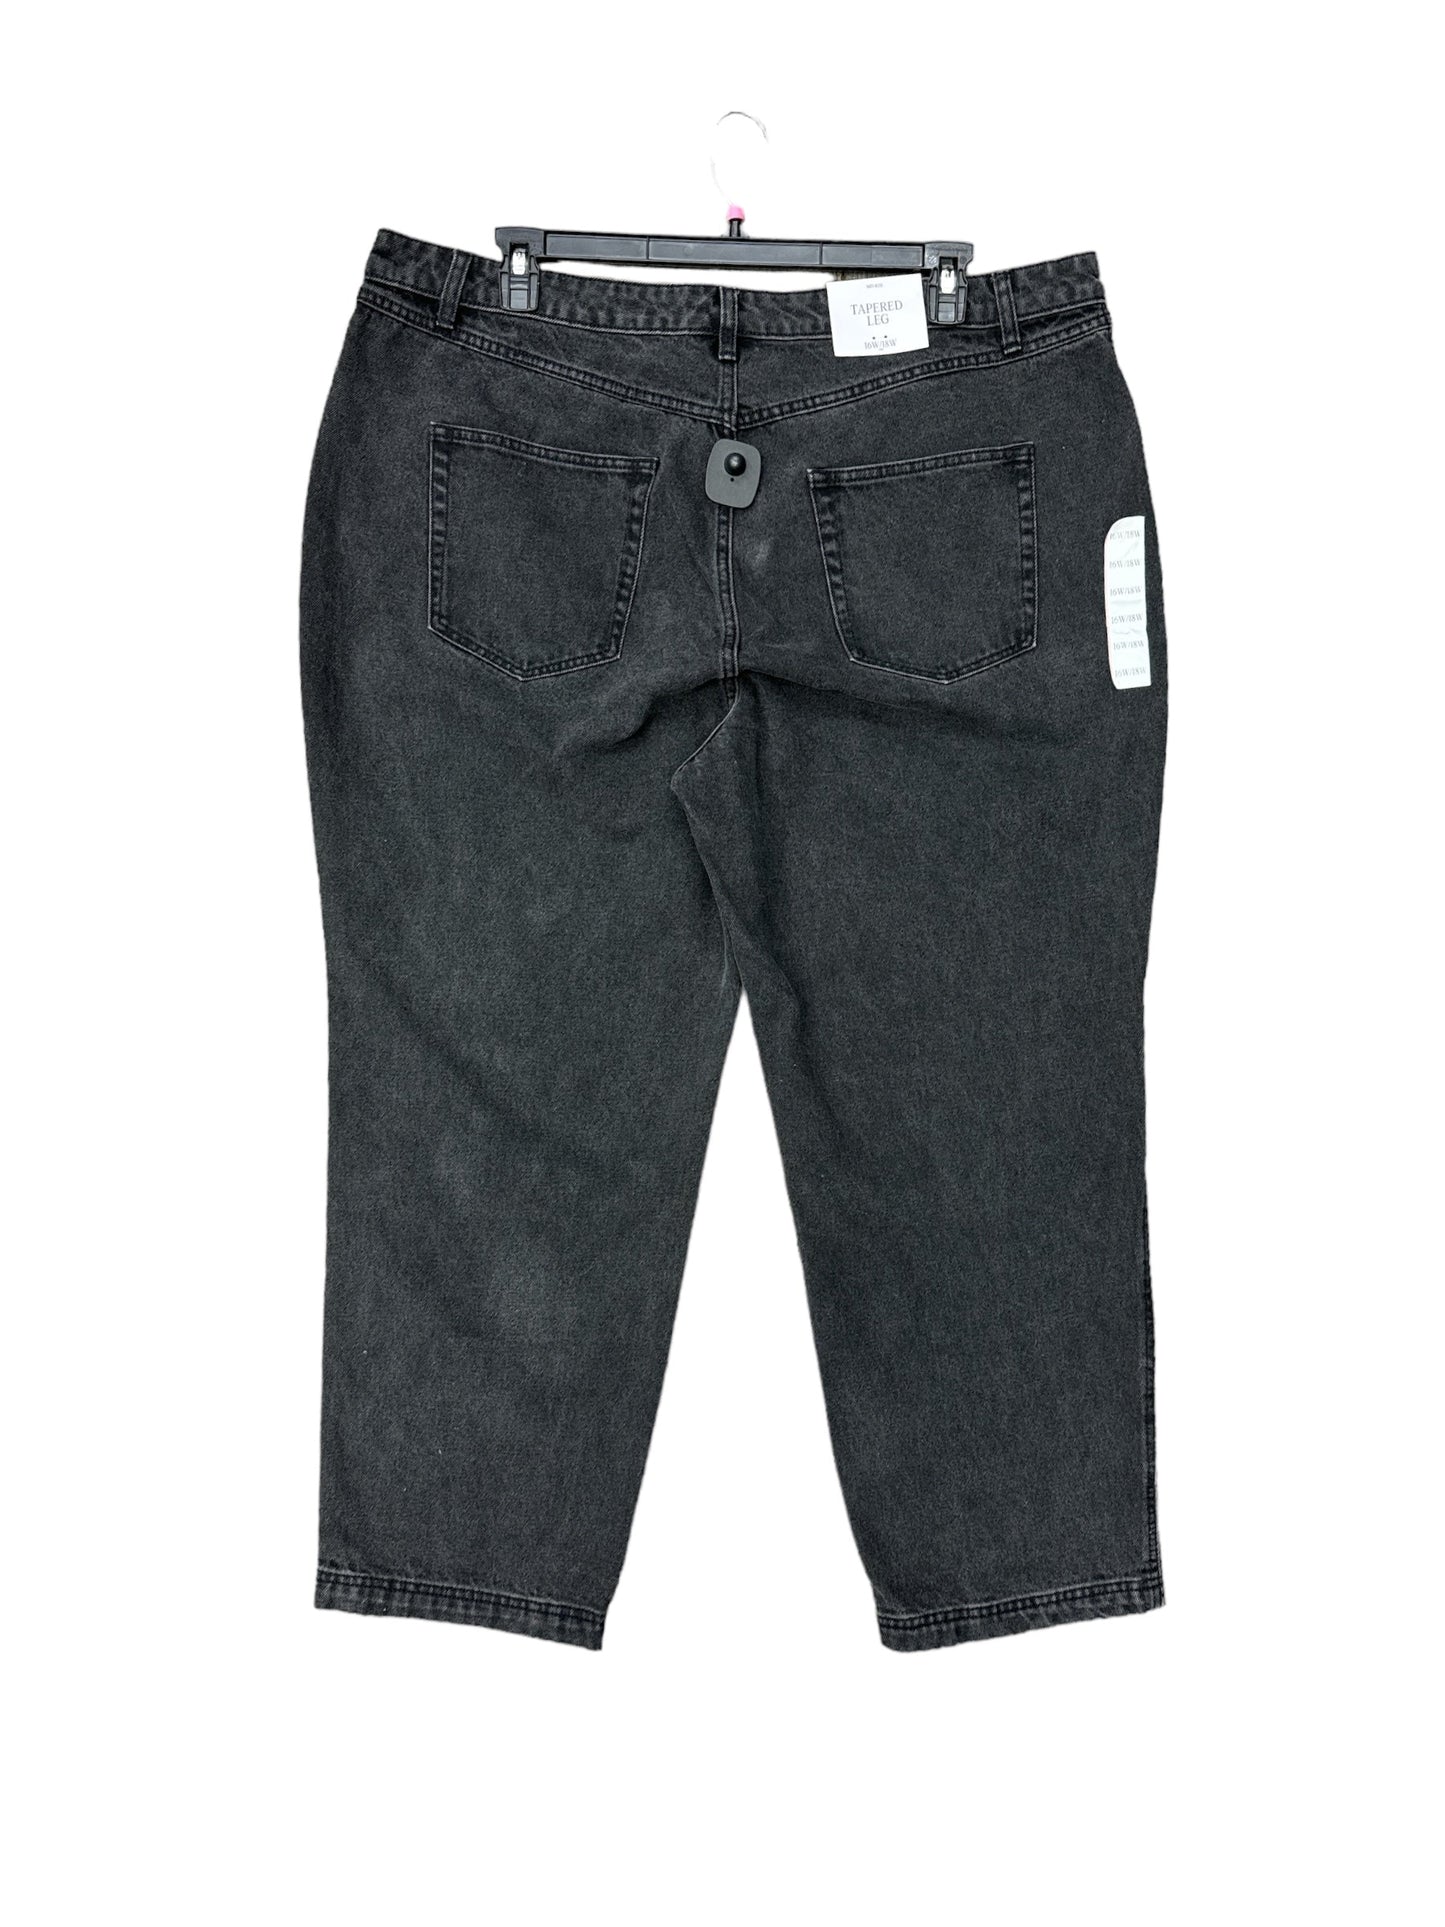 Black Pants Cropped Target, Size 16w